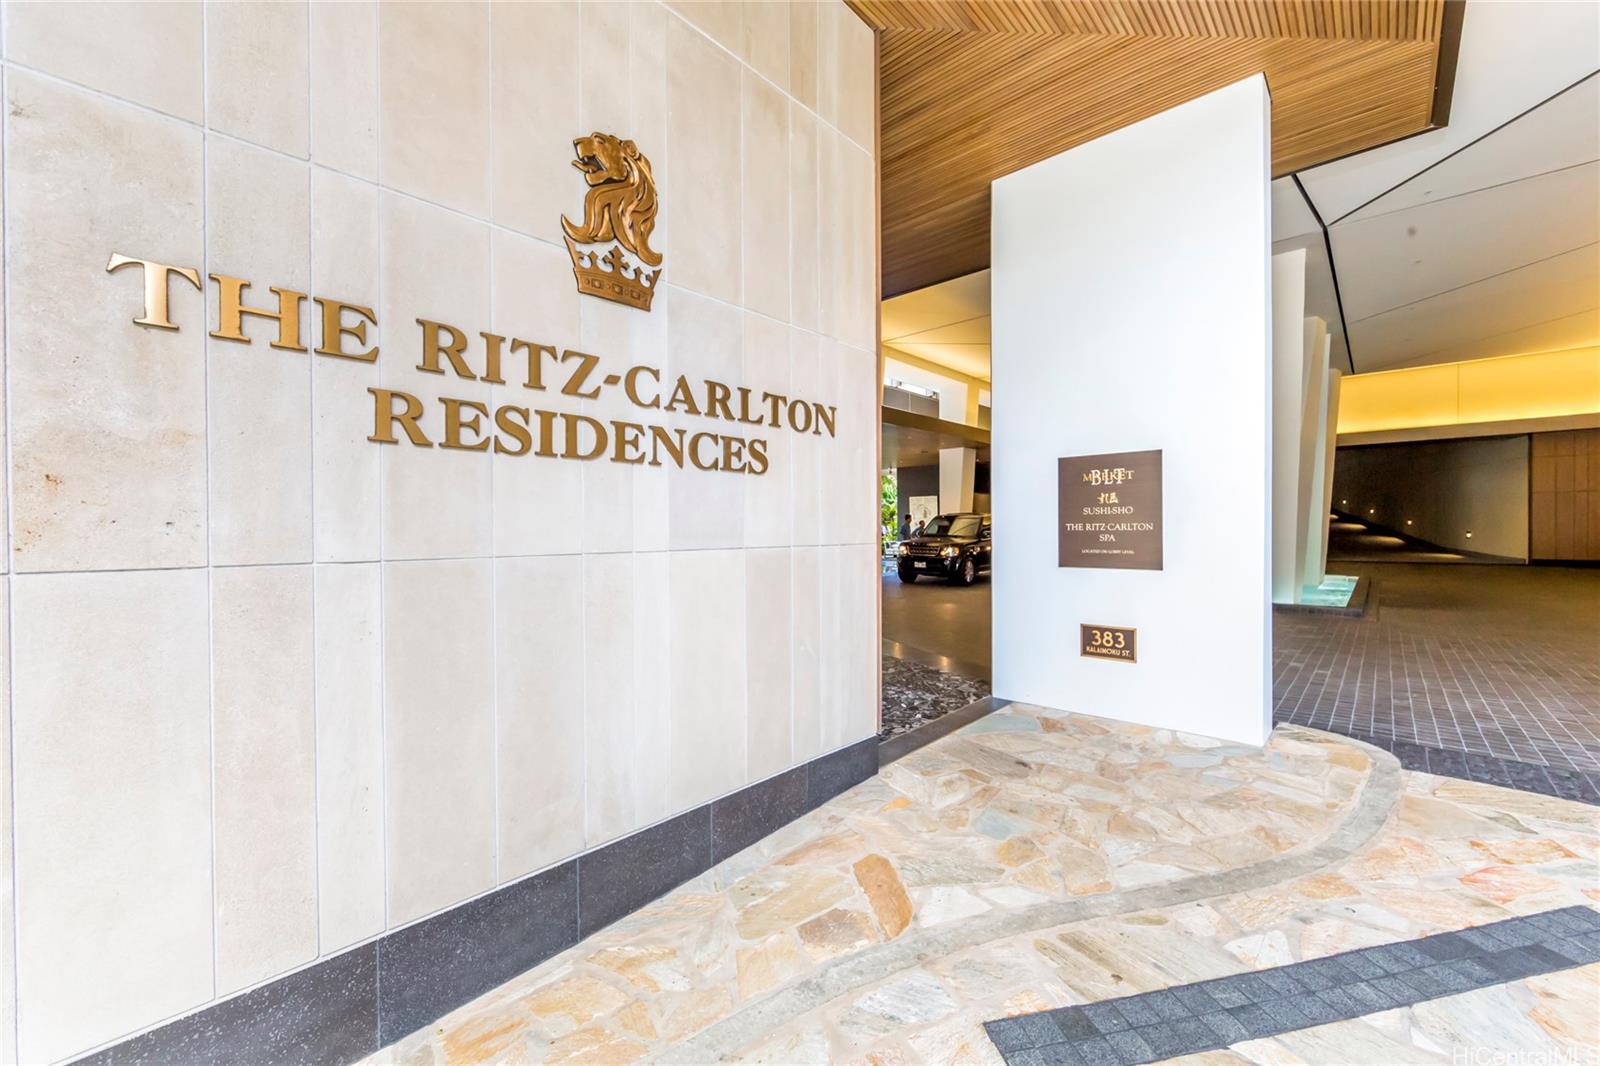 The Ritz-carlton Residences Twr 2 - 383  2139 Kuhio Avenue  Unit D1005